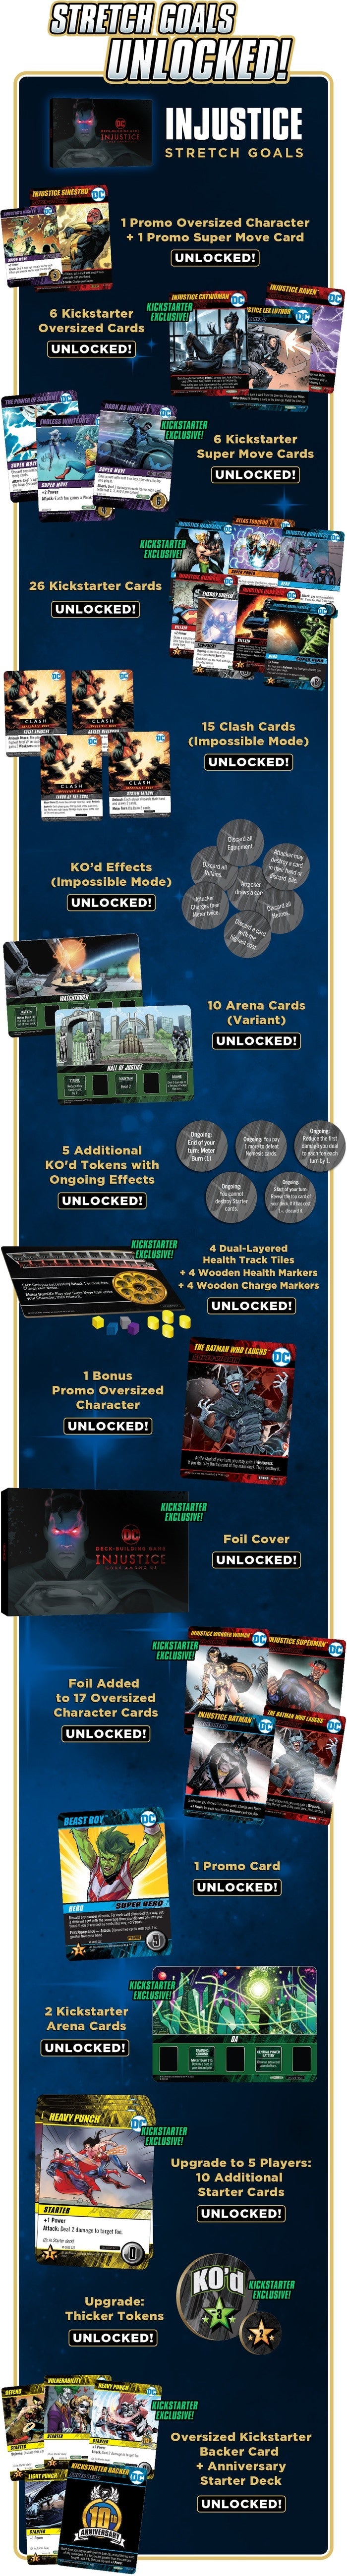 DC Deck Building  Injustice Gods Among Us (Kickstarter Edition)